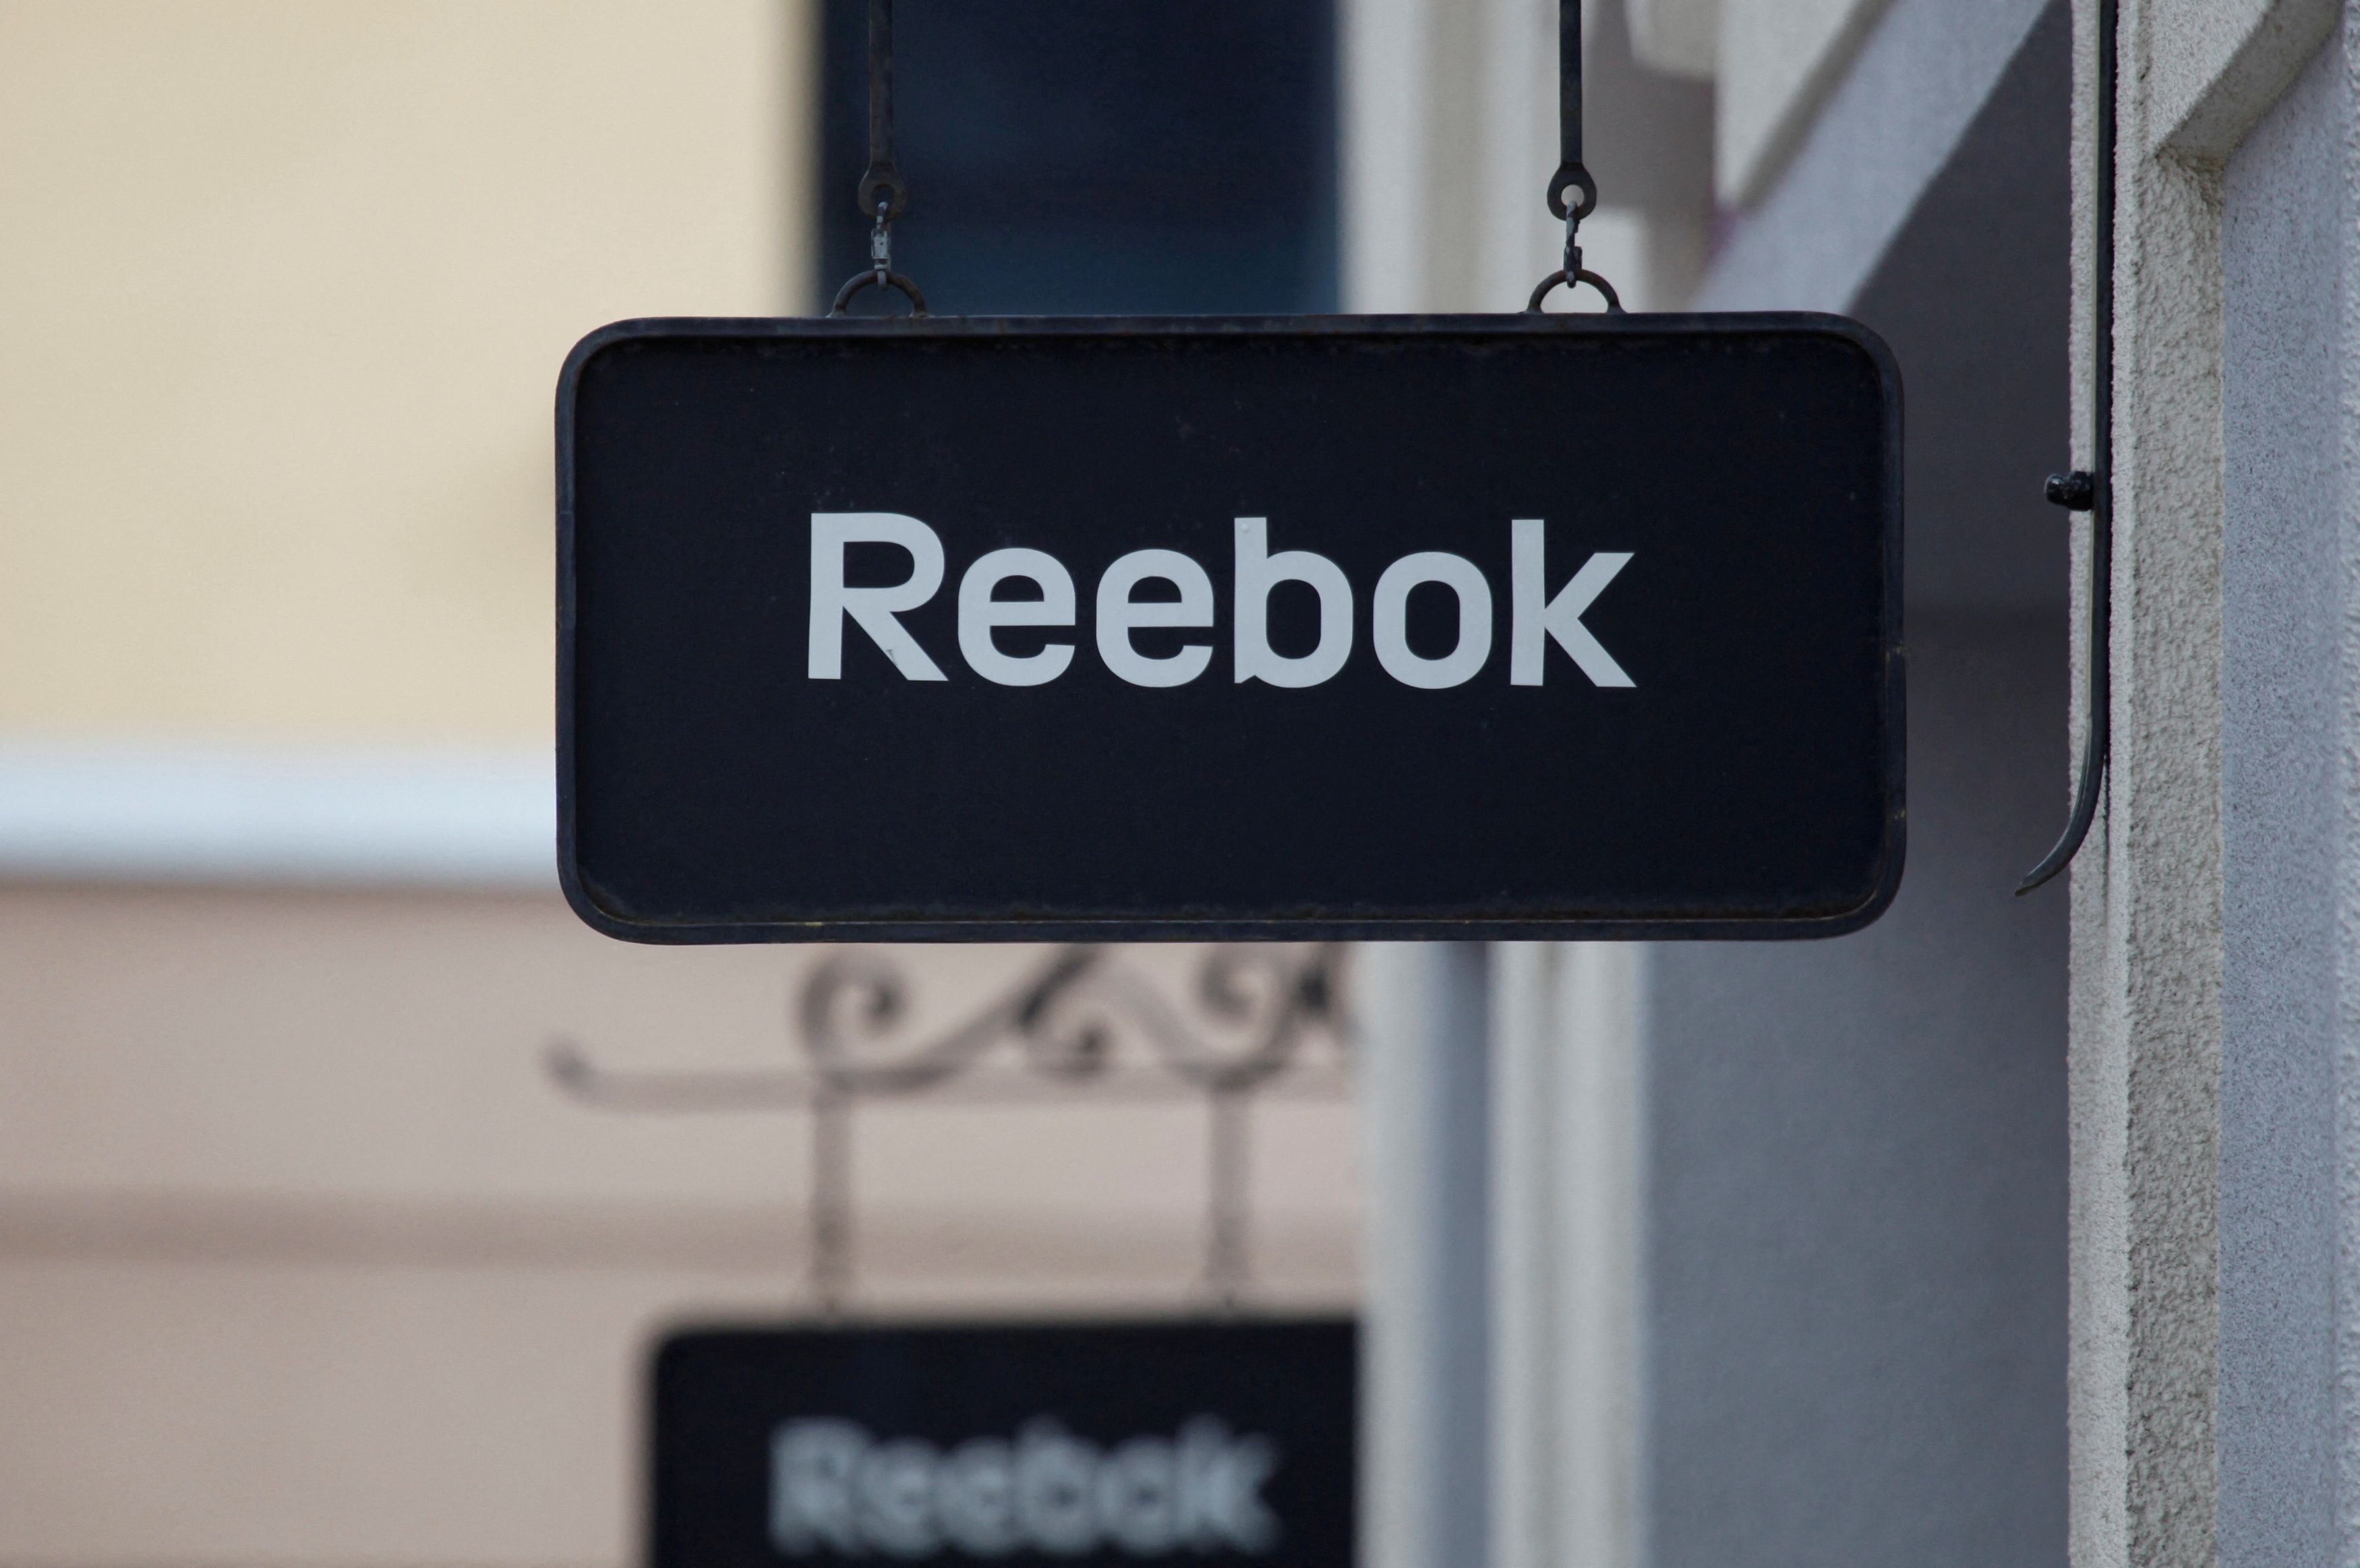 Reebok launches new identity - Design Week